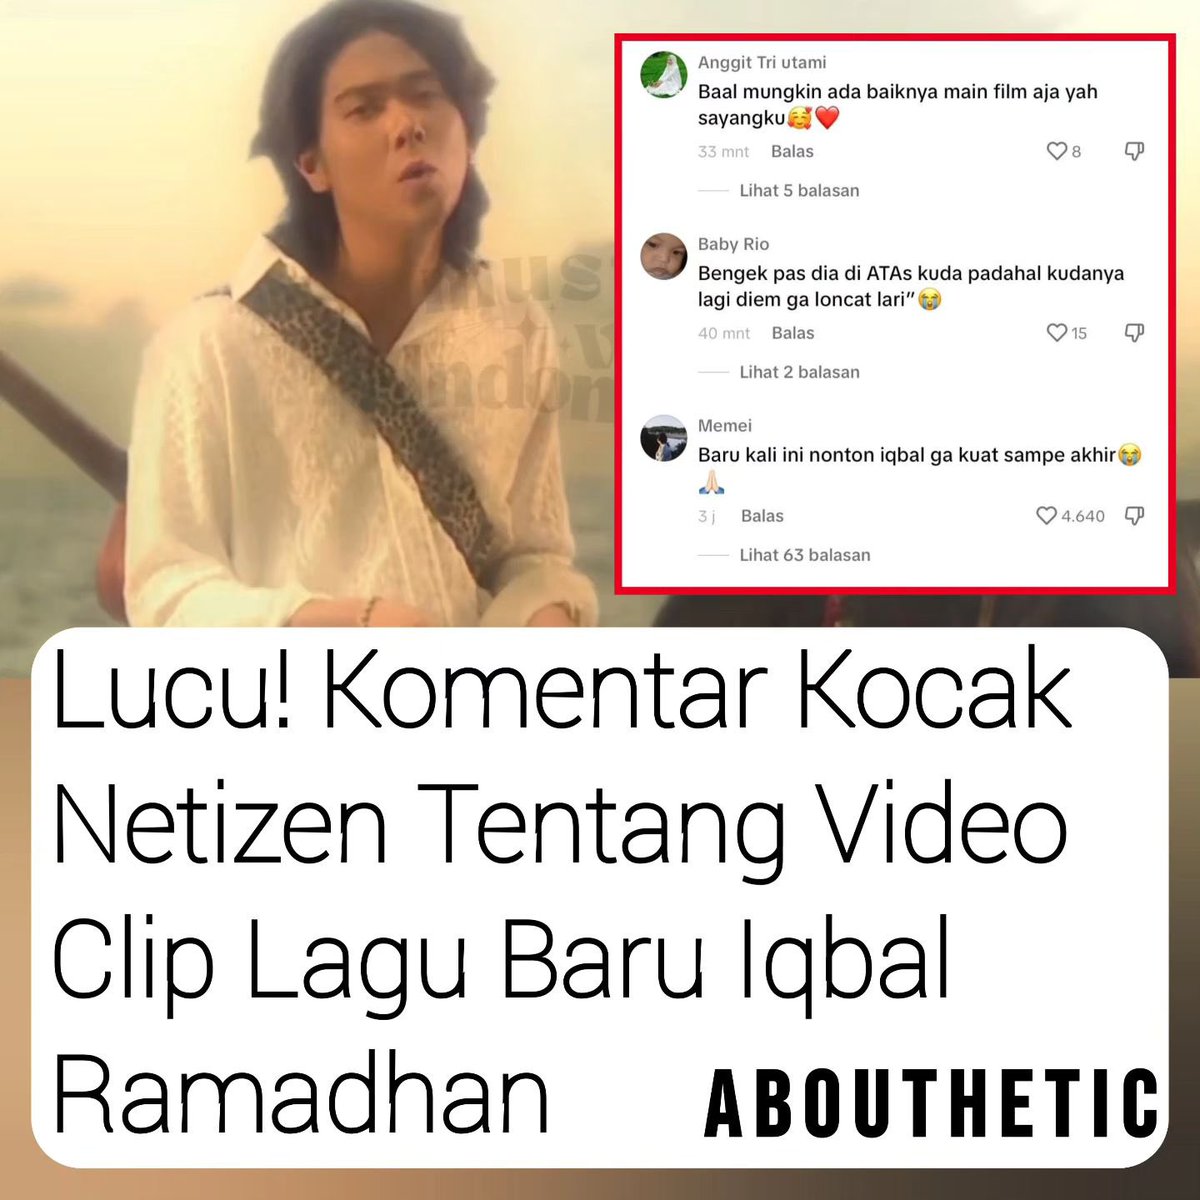 Komentar Kocak Netizen Tantang Vidio Clip Baru Iqbal Ramadhan 

Bal knapa suaramu kayak Dilan Cepmek

—a thread